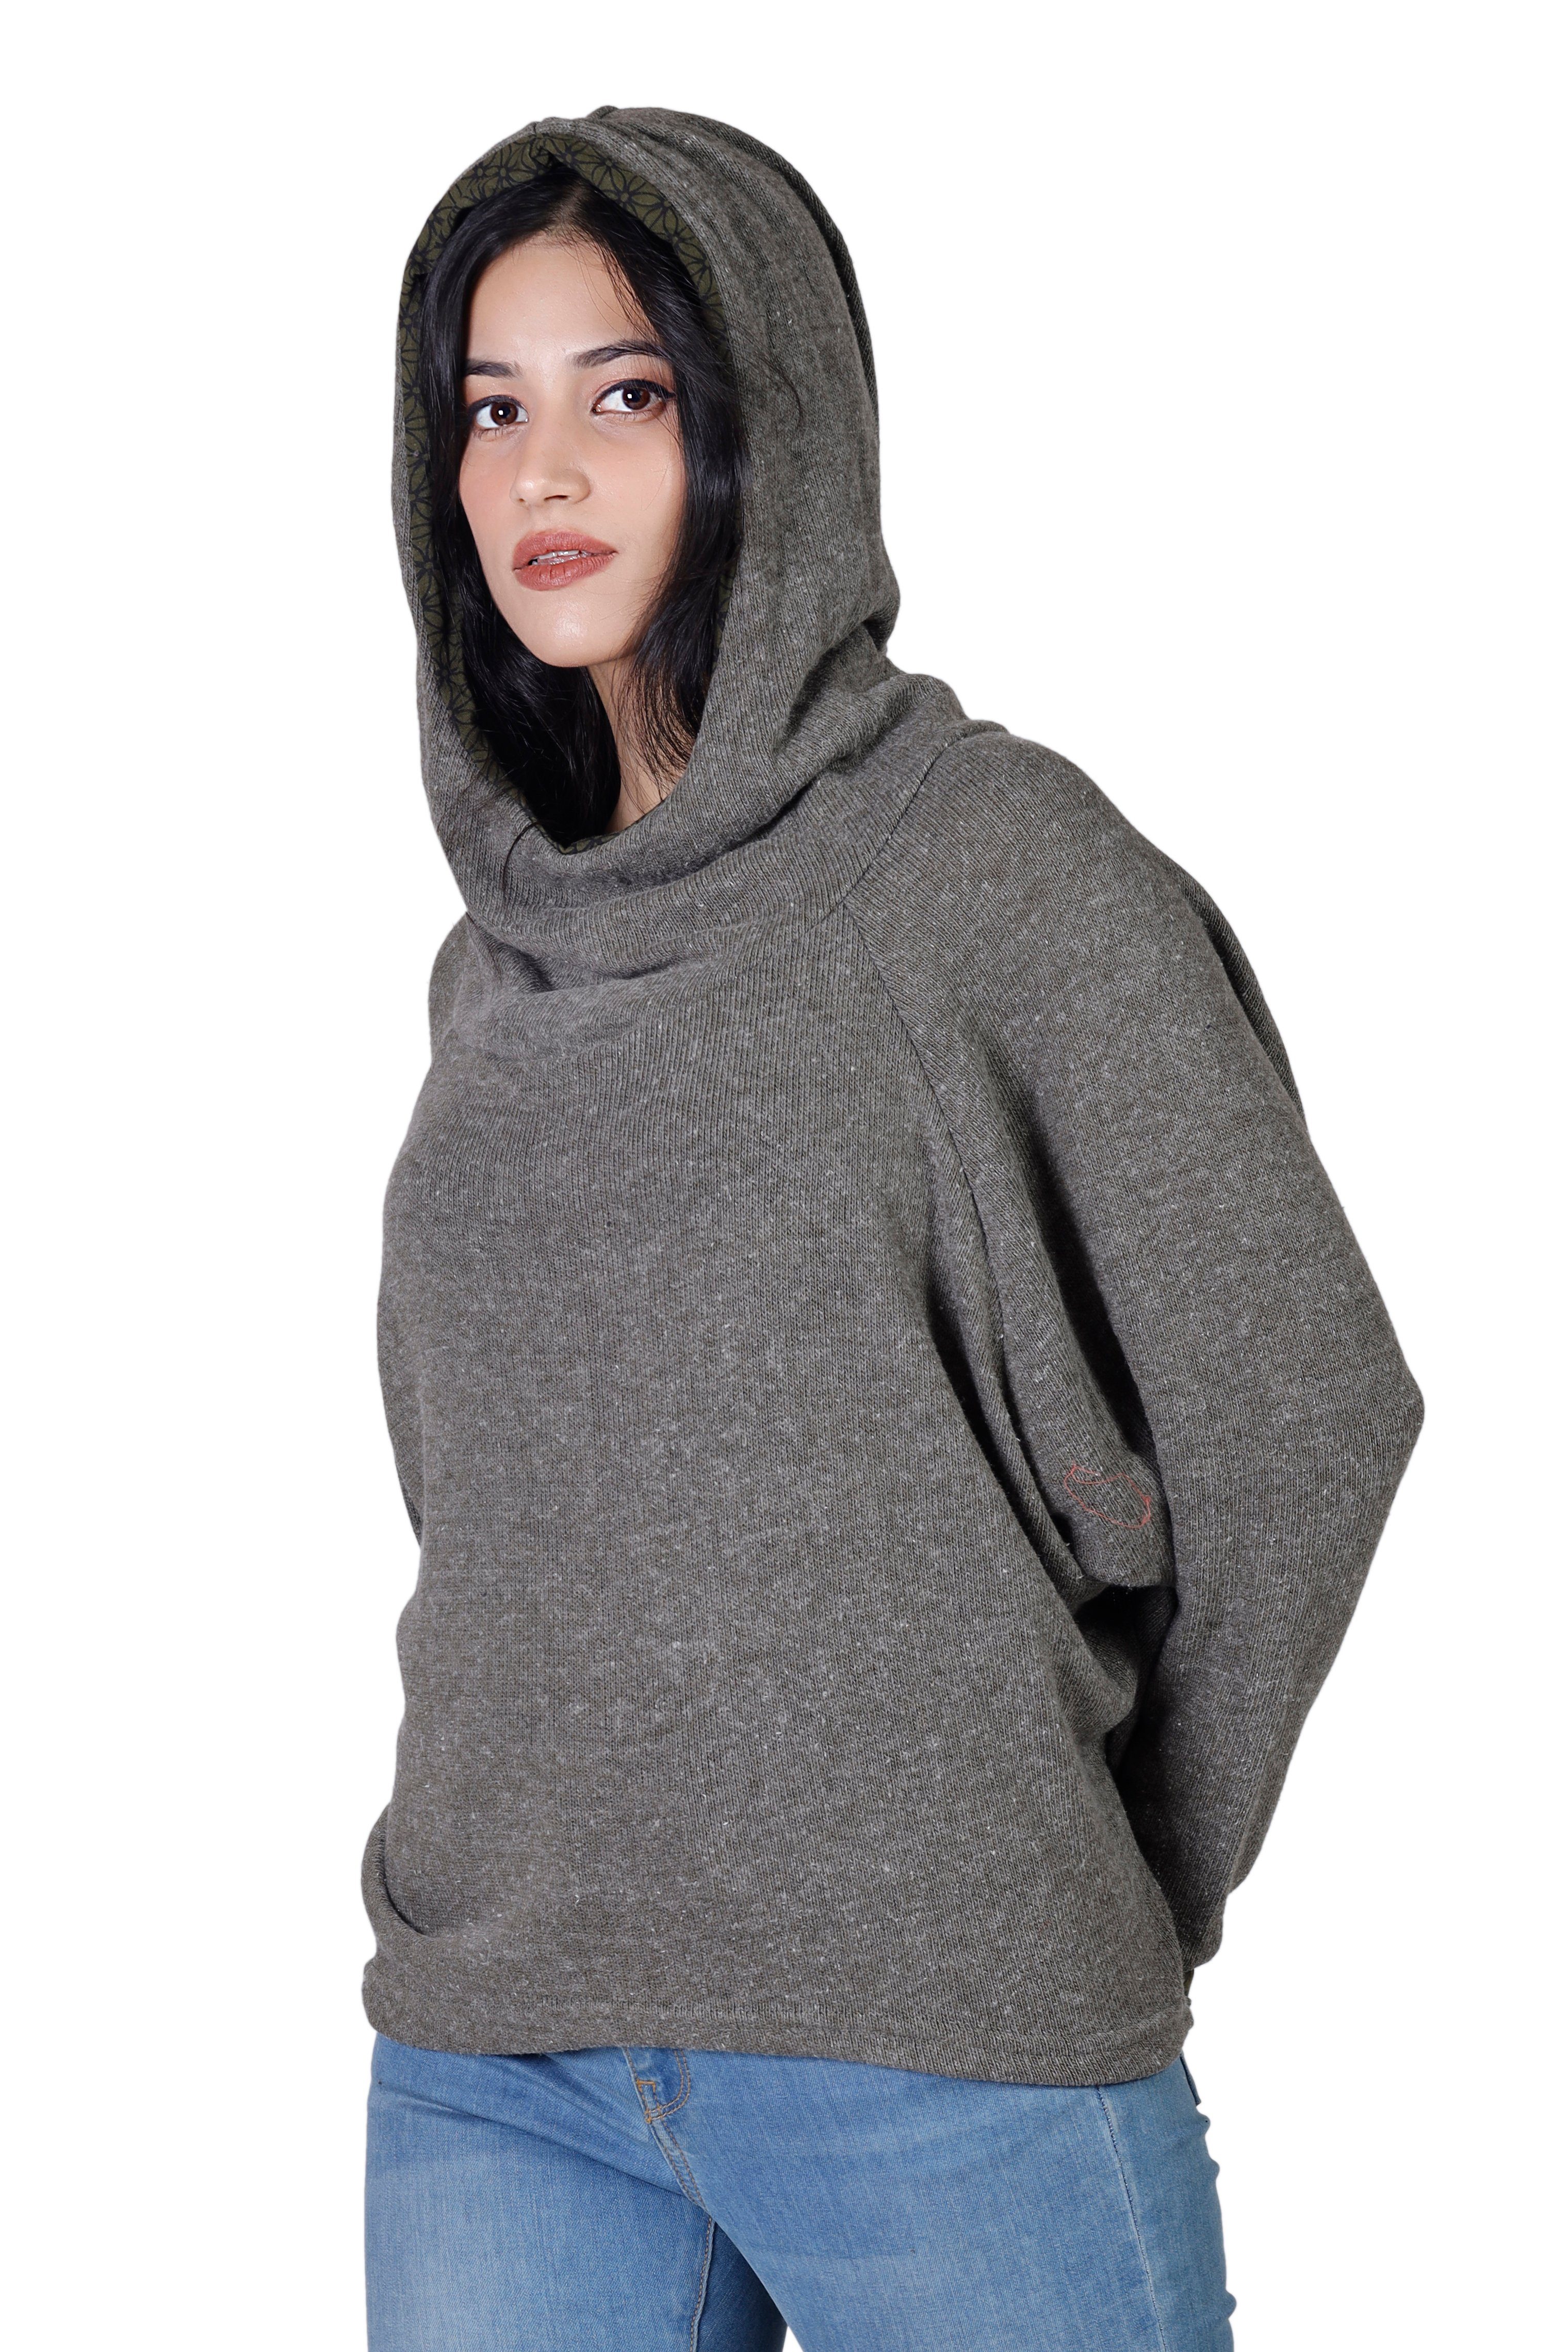 Guru-Shop Longsleeve Hoody, Pullover, Sweatshirt, alternative Kapuzenpullover -.. Bekleidung khakigrün